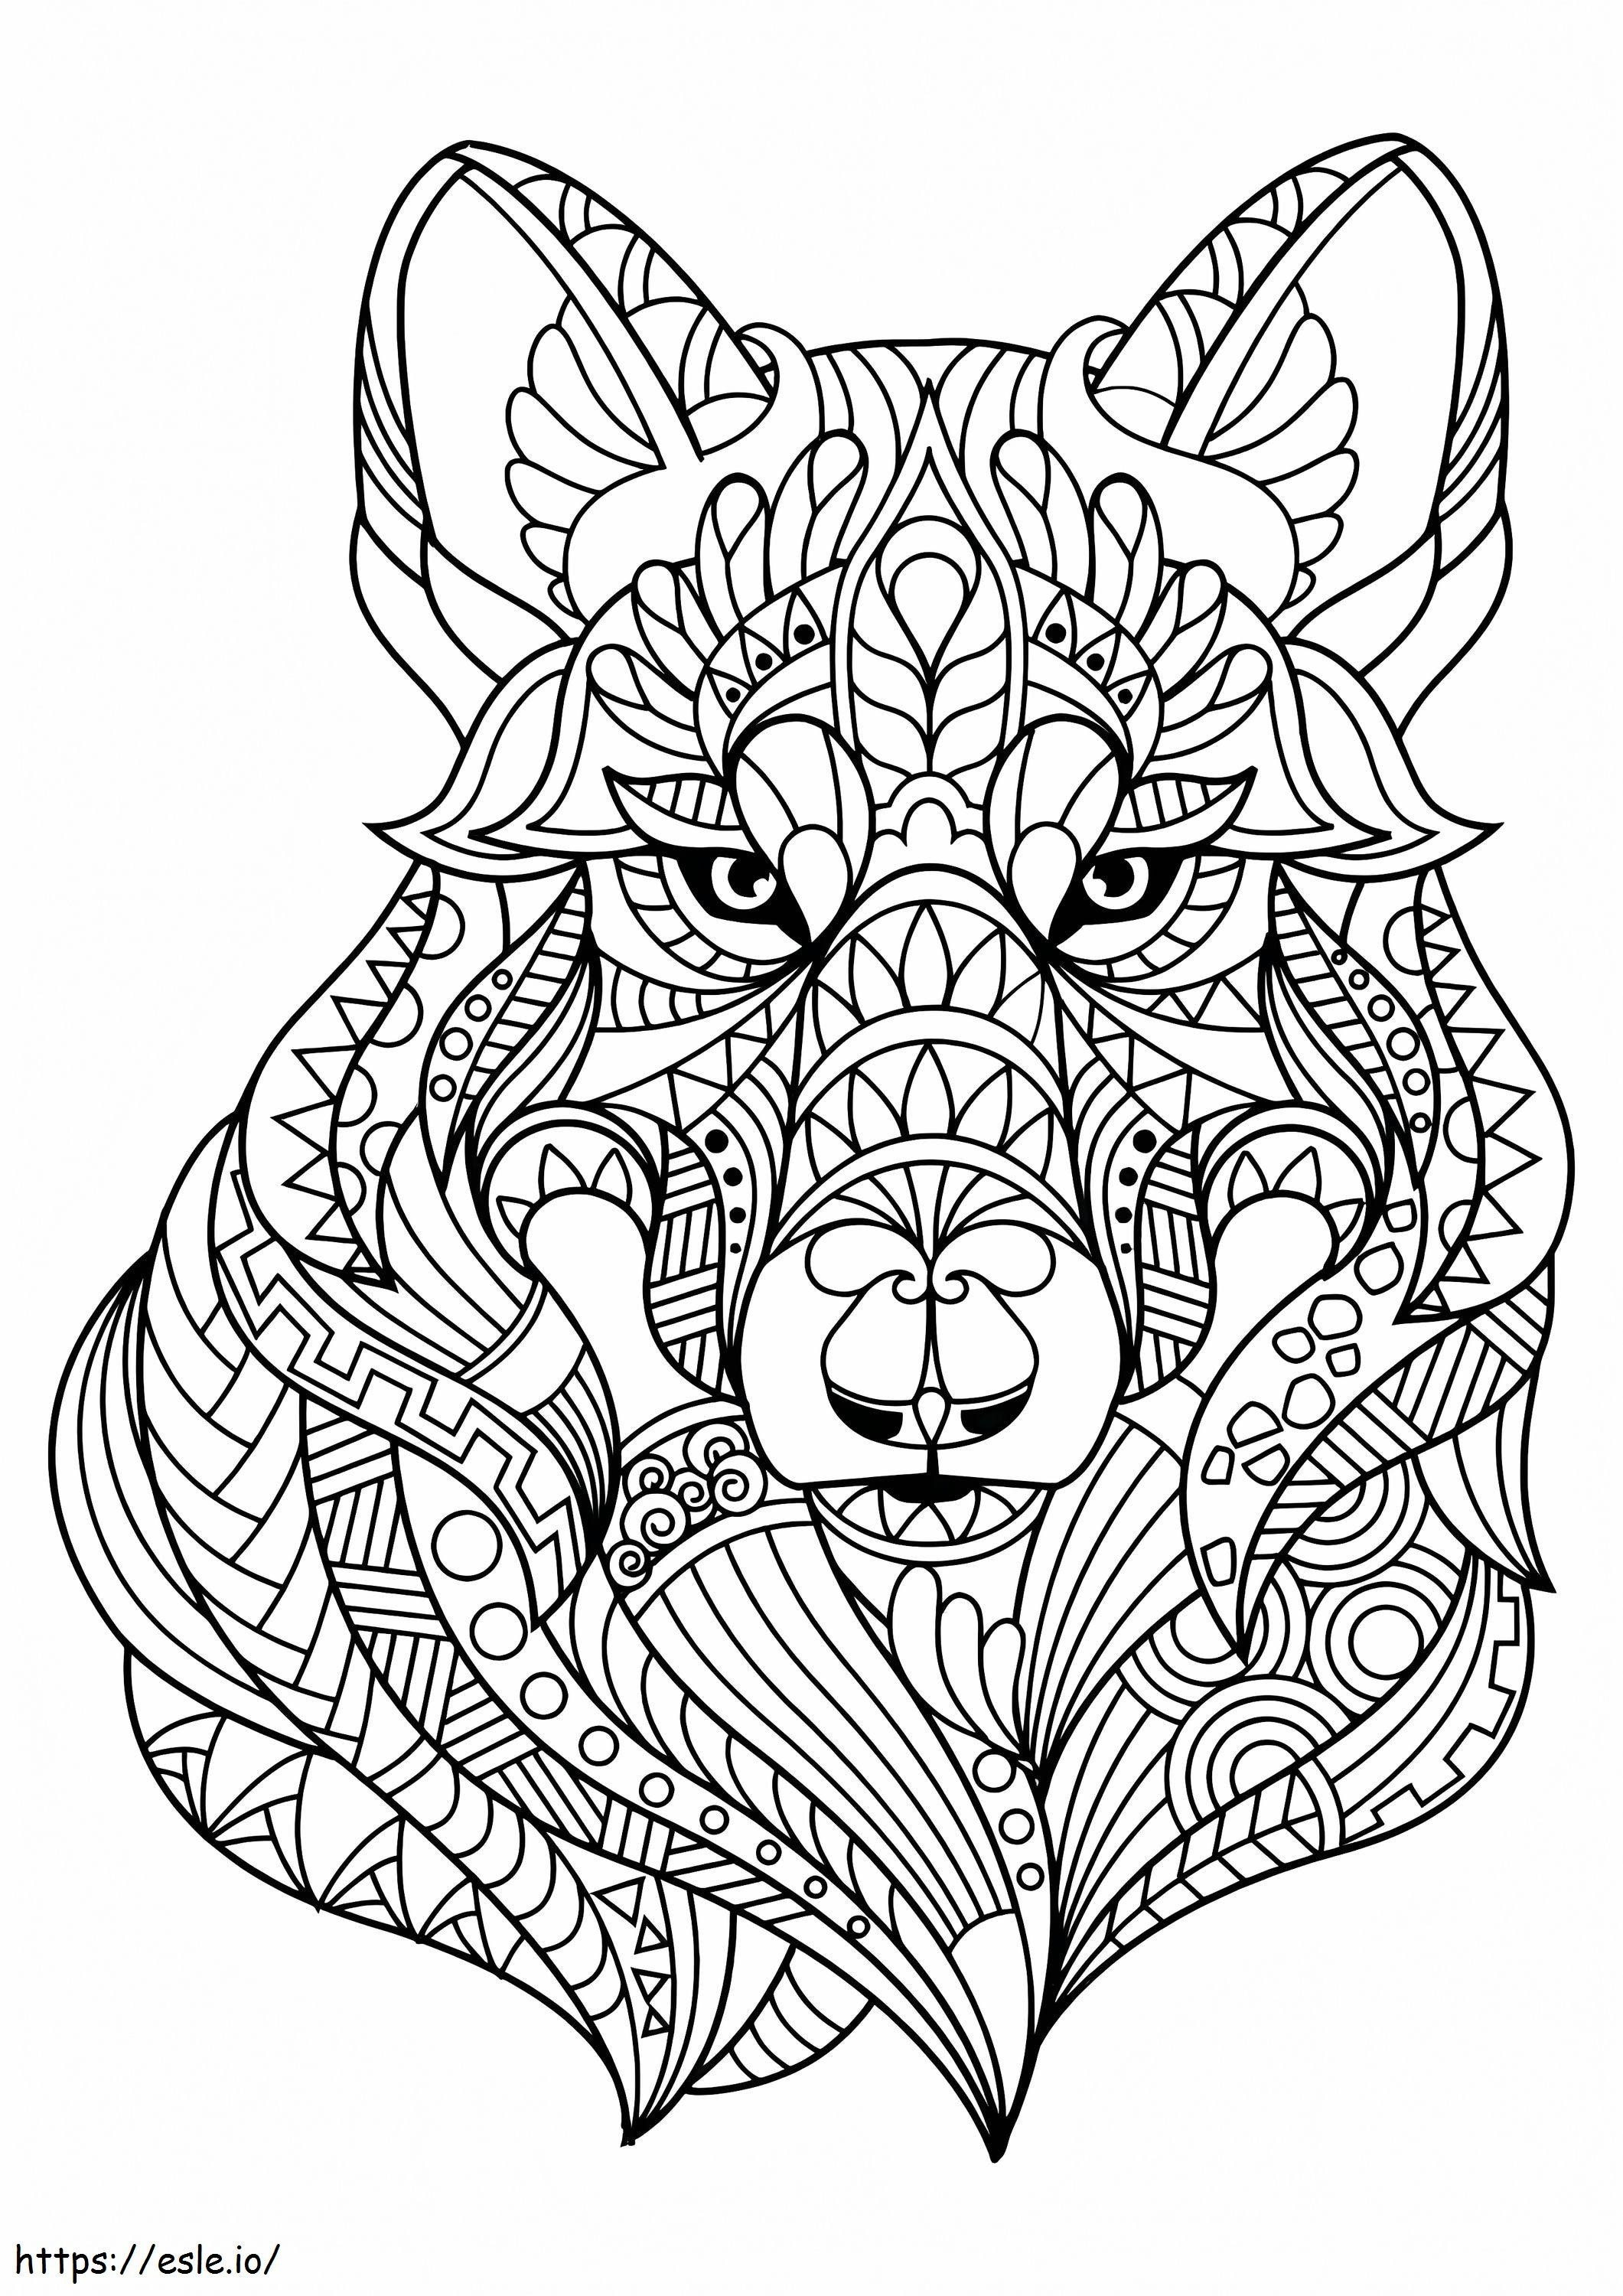 Wolf Animal Mandala coloring page